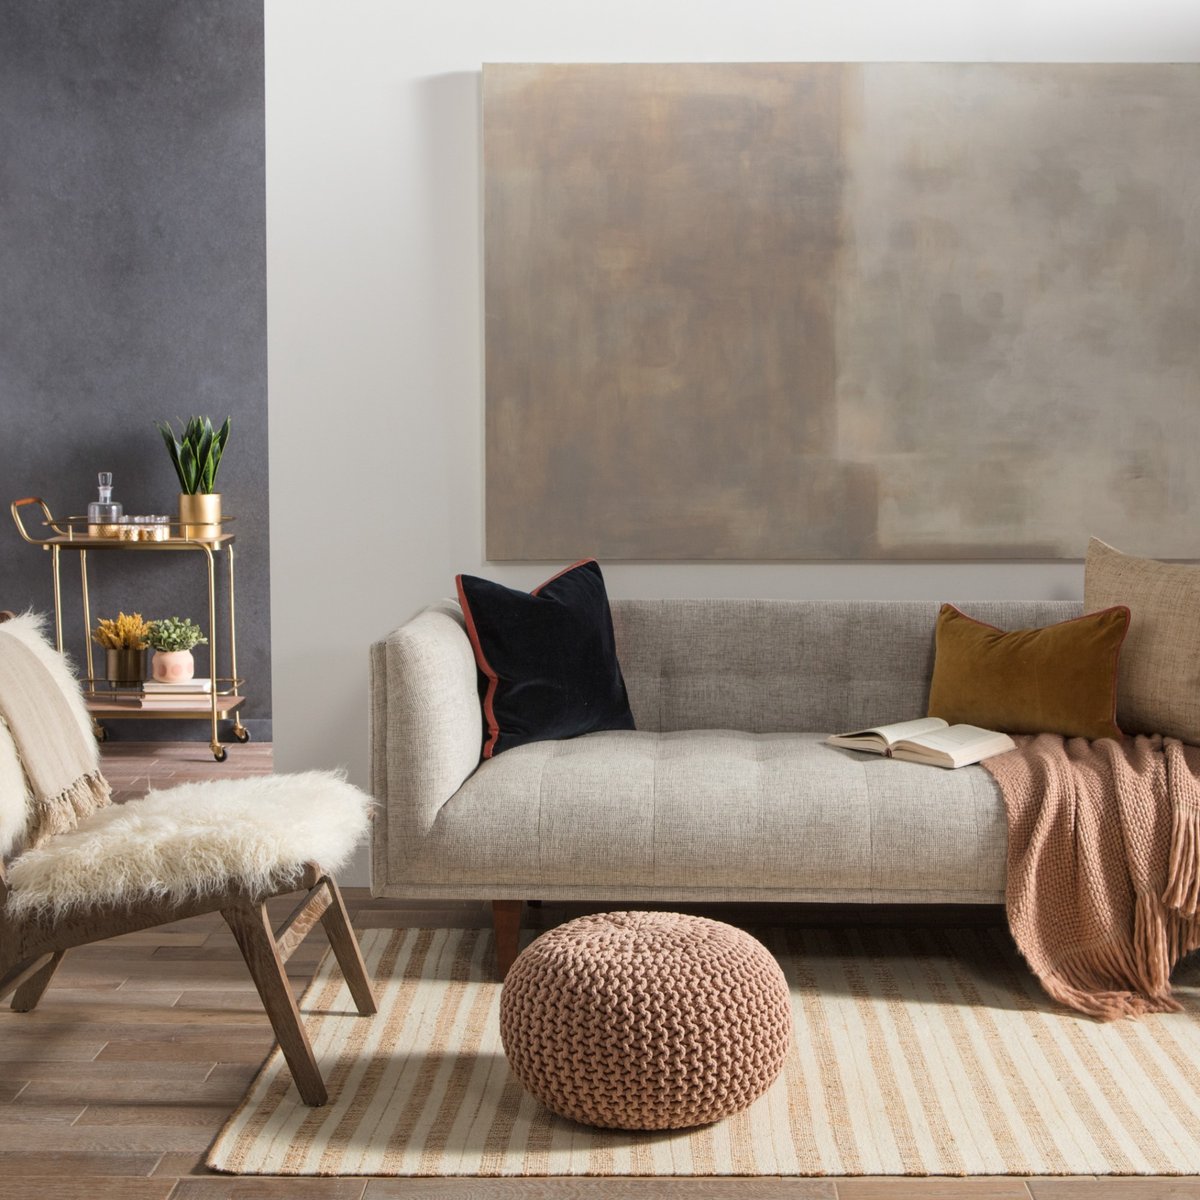 Artfully Accessorized Living Room Decor Ideas